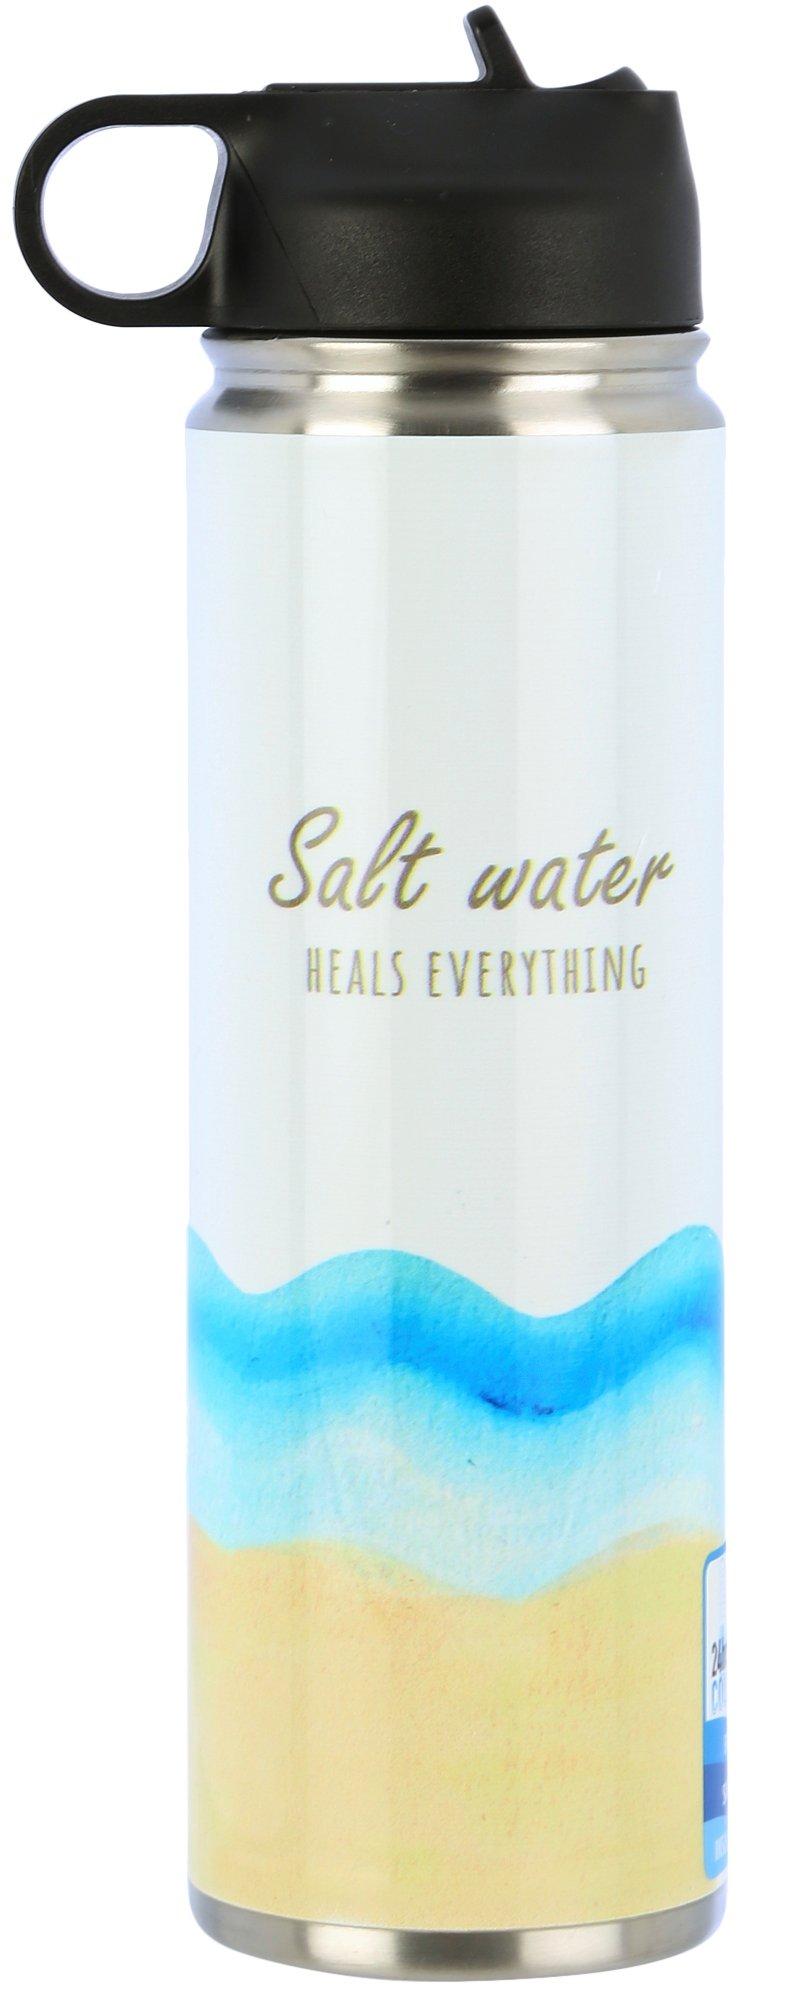 Meteor 22 oz. Salt Water Heals Everything Water Bottle